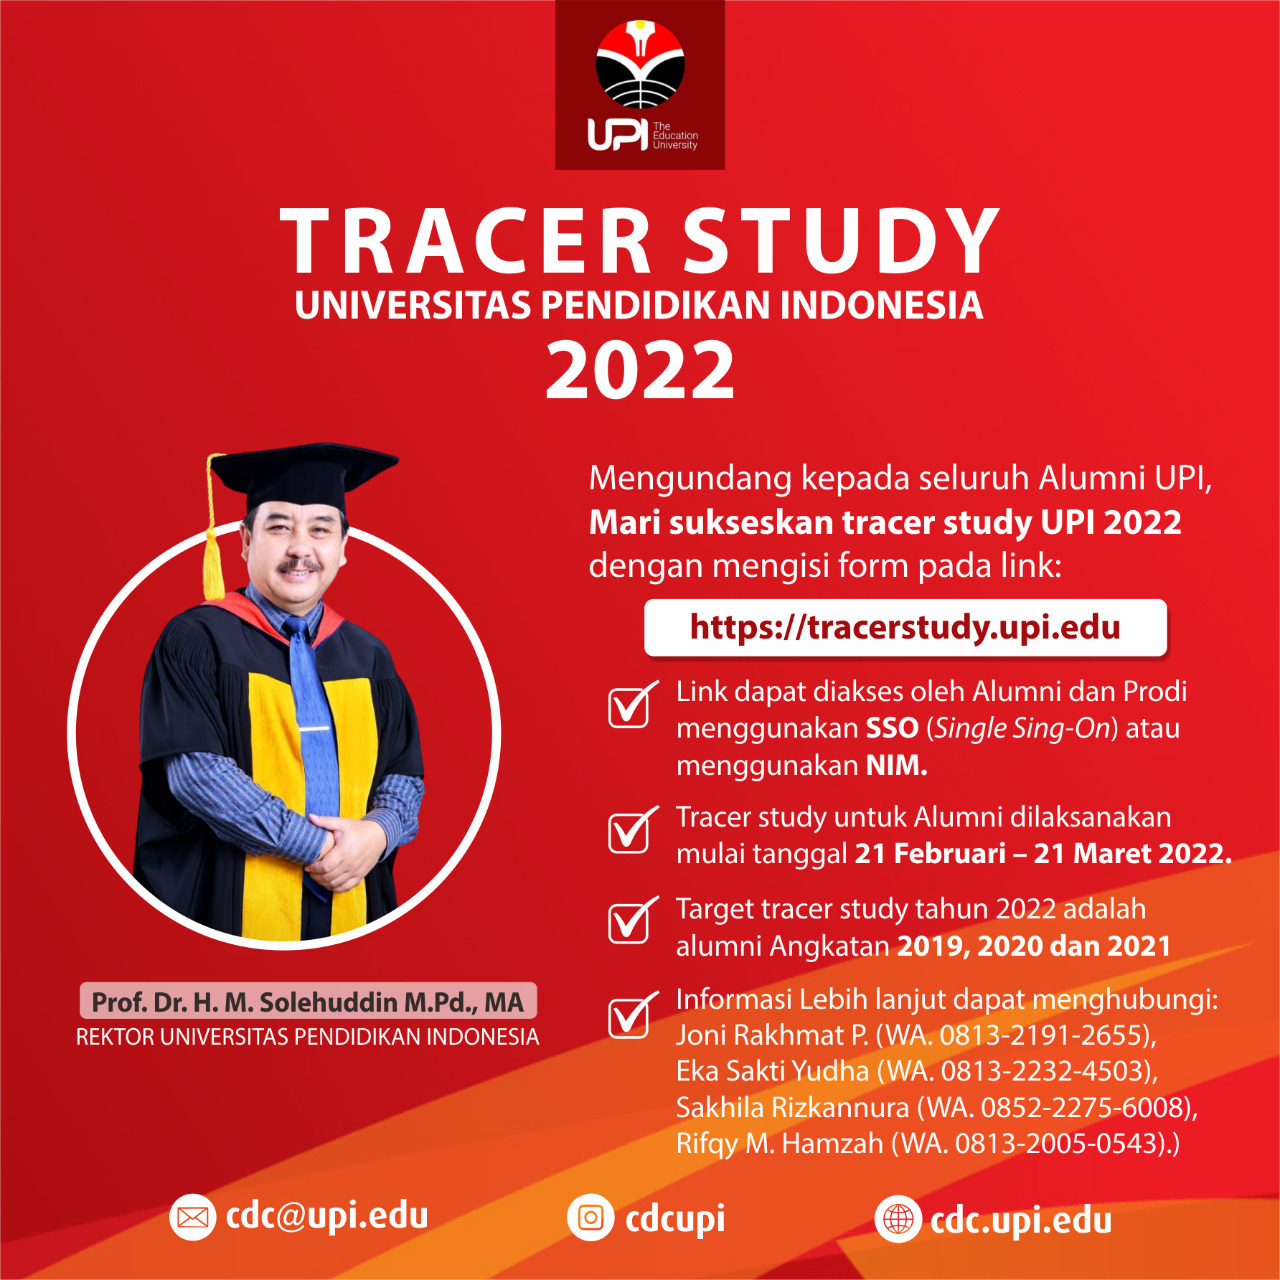 Pelaksanaan Tracer Study Universitas Pendidikan Indonesia Tahun 2022